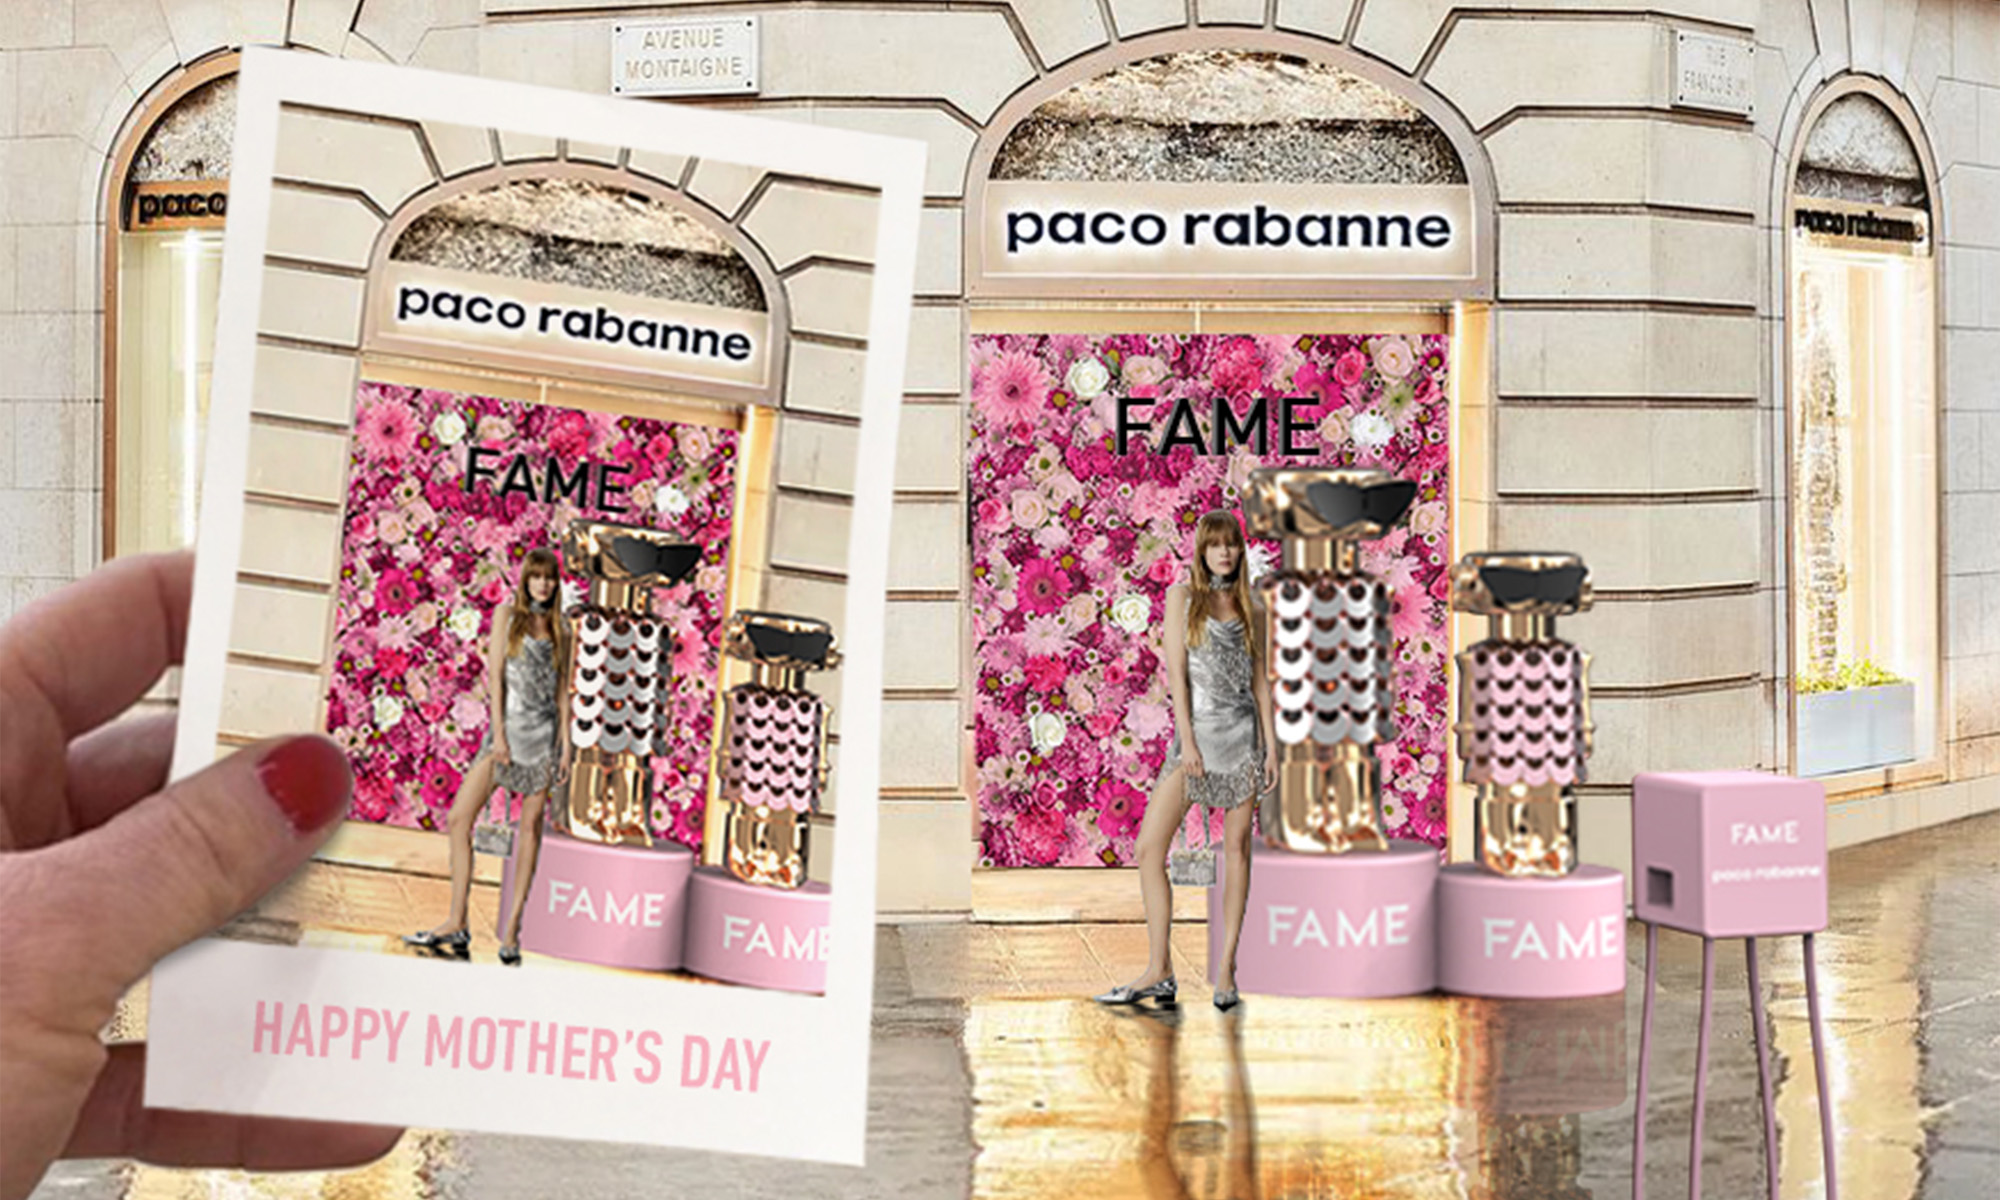 Paco Rabanne - Fame - Fête des mères